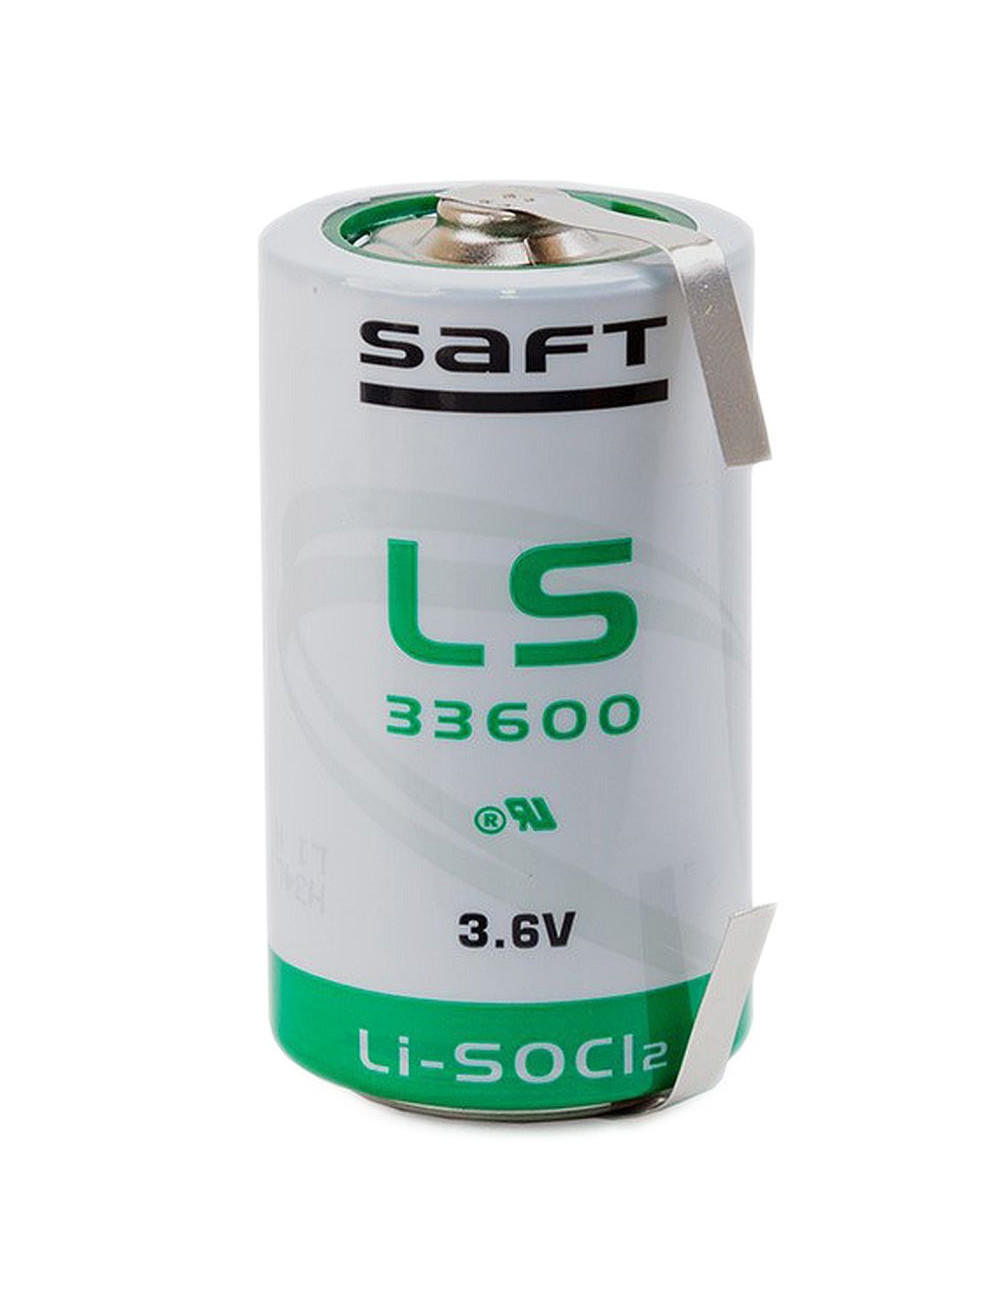 LS33600 CNR pila litio D 3,6V 17Ah Saft serie LS con terminales planos para soldar - LS33600 CNR -  -  - 1